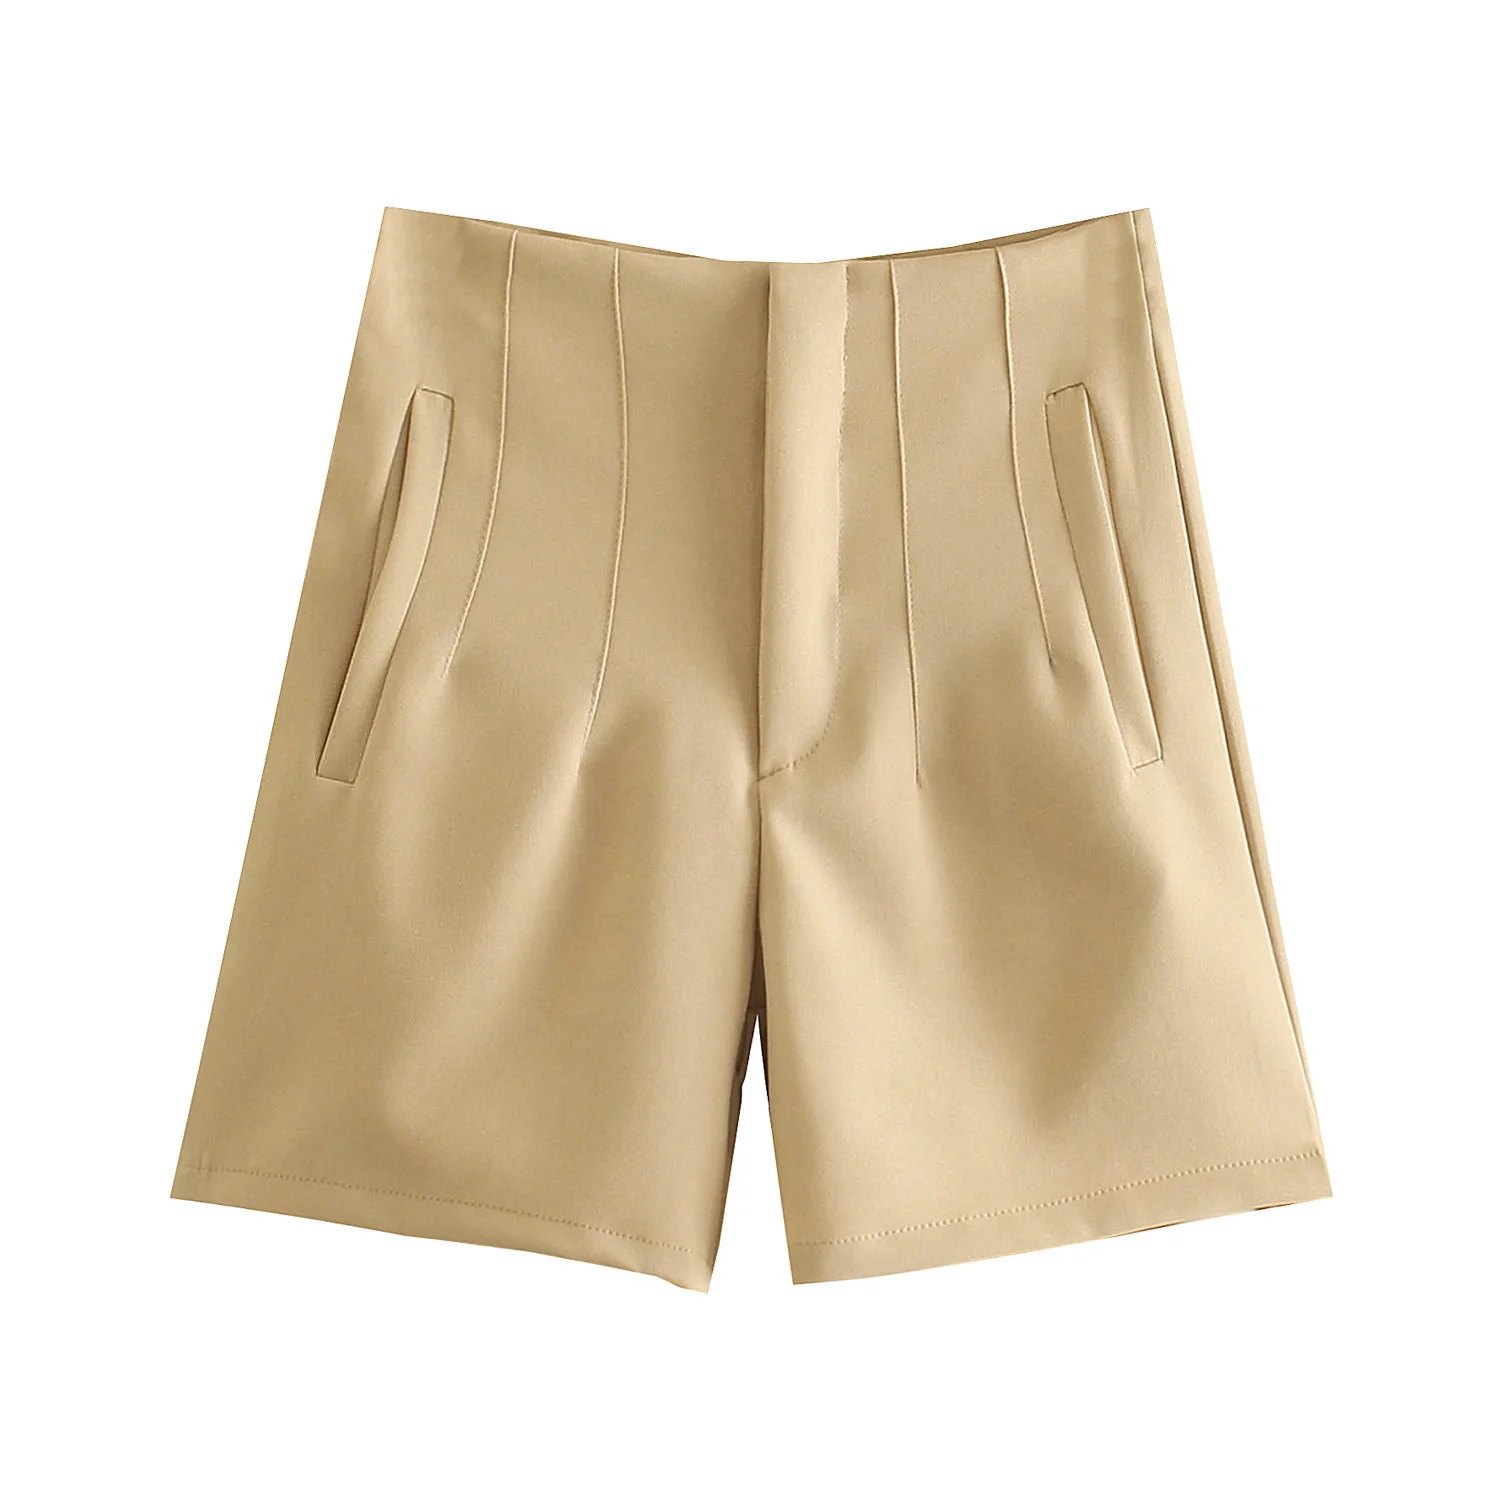 WXWT Women Solid Shorts High Waits Zipper Fly Shorts With Pockets Female Chic Casual Shorts Mujer Pantalon LY9385 levis shorts Shorts